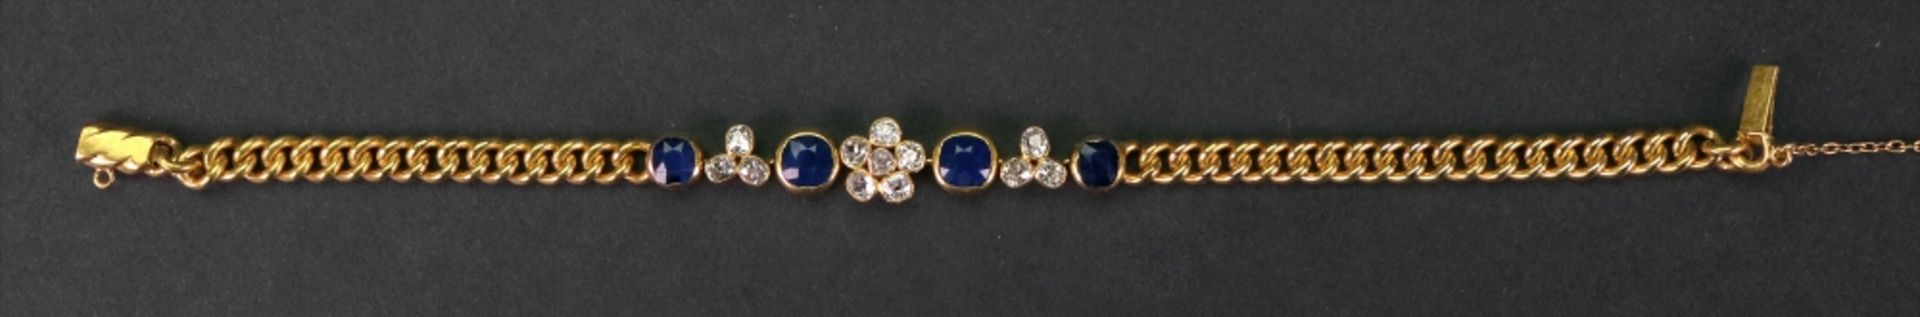 A gold, sapphire and diamond-set bracelet, - Image 3 of 3